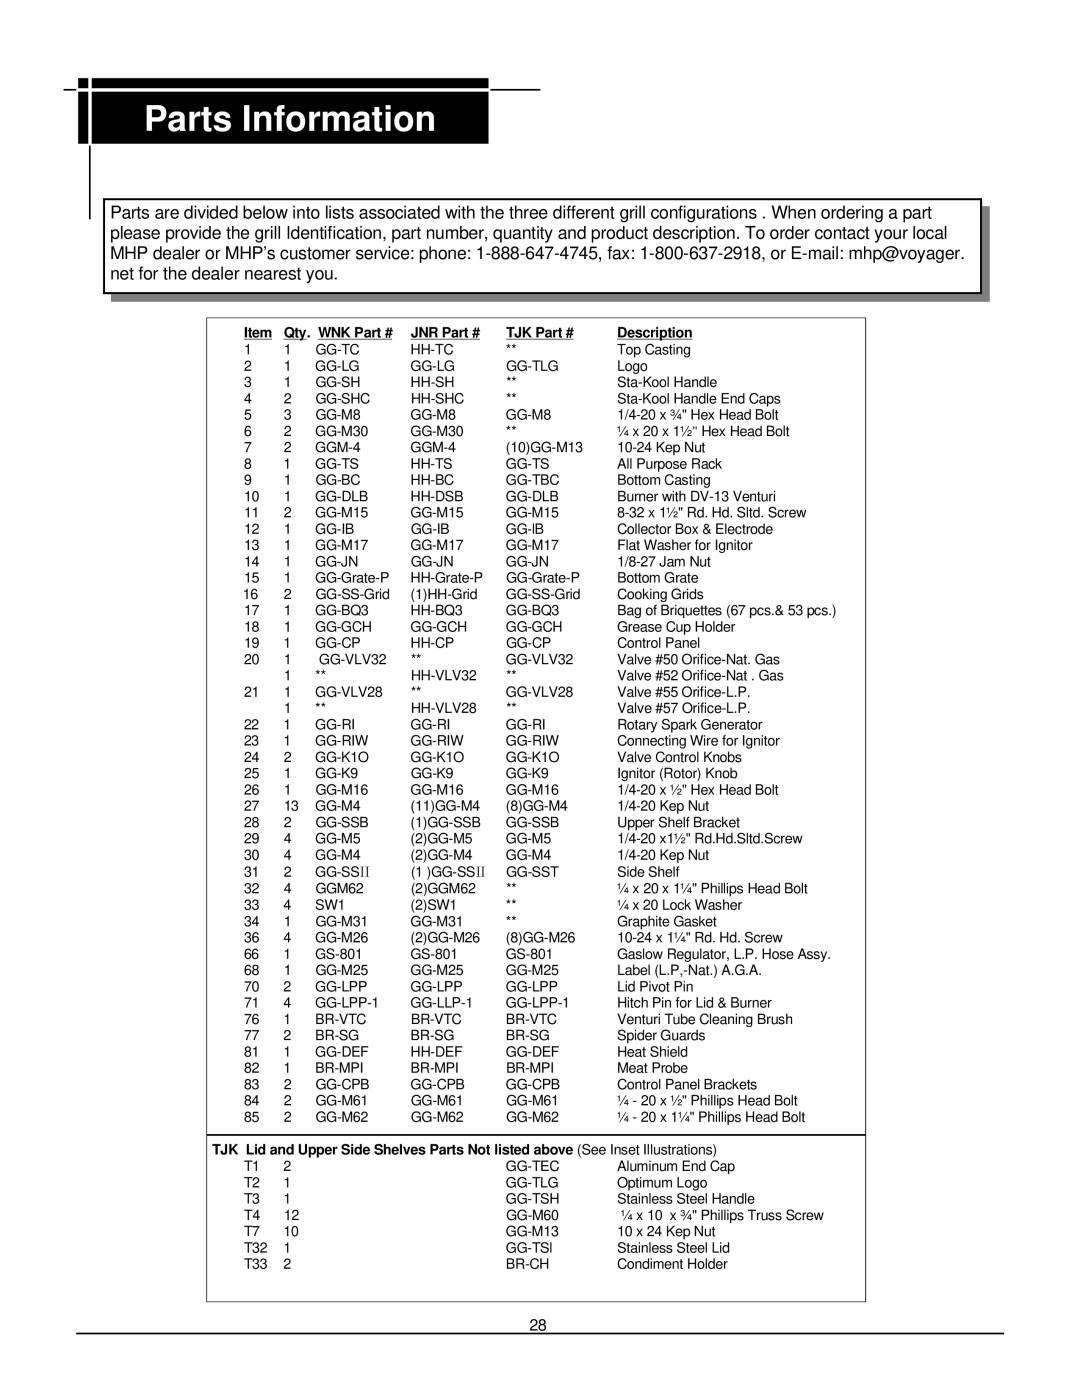 MHP TJK, JNR owner manual Parts Information, Qty. WNK, Description 